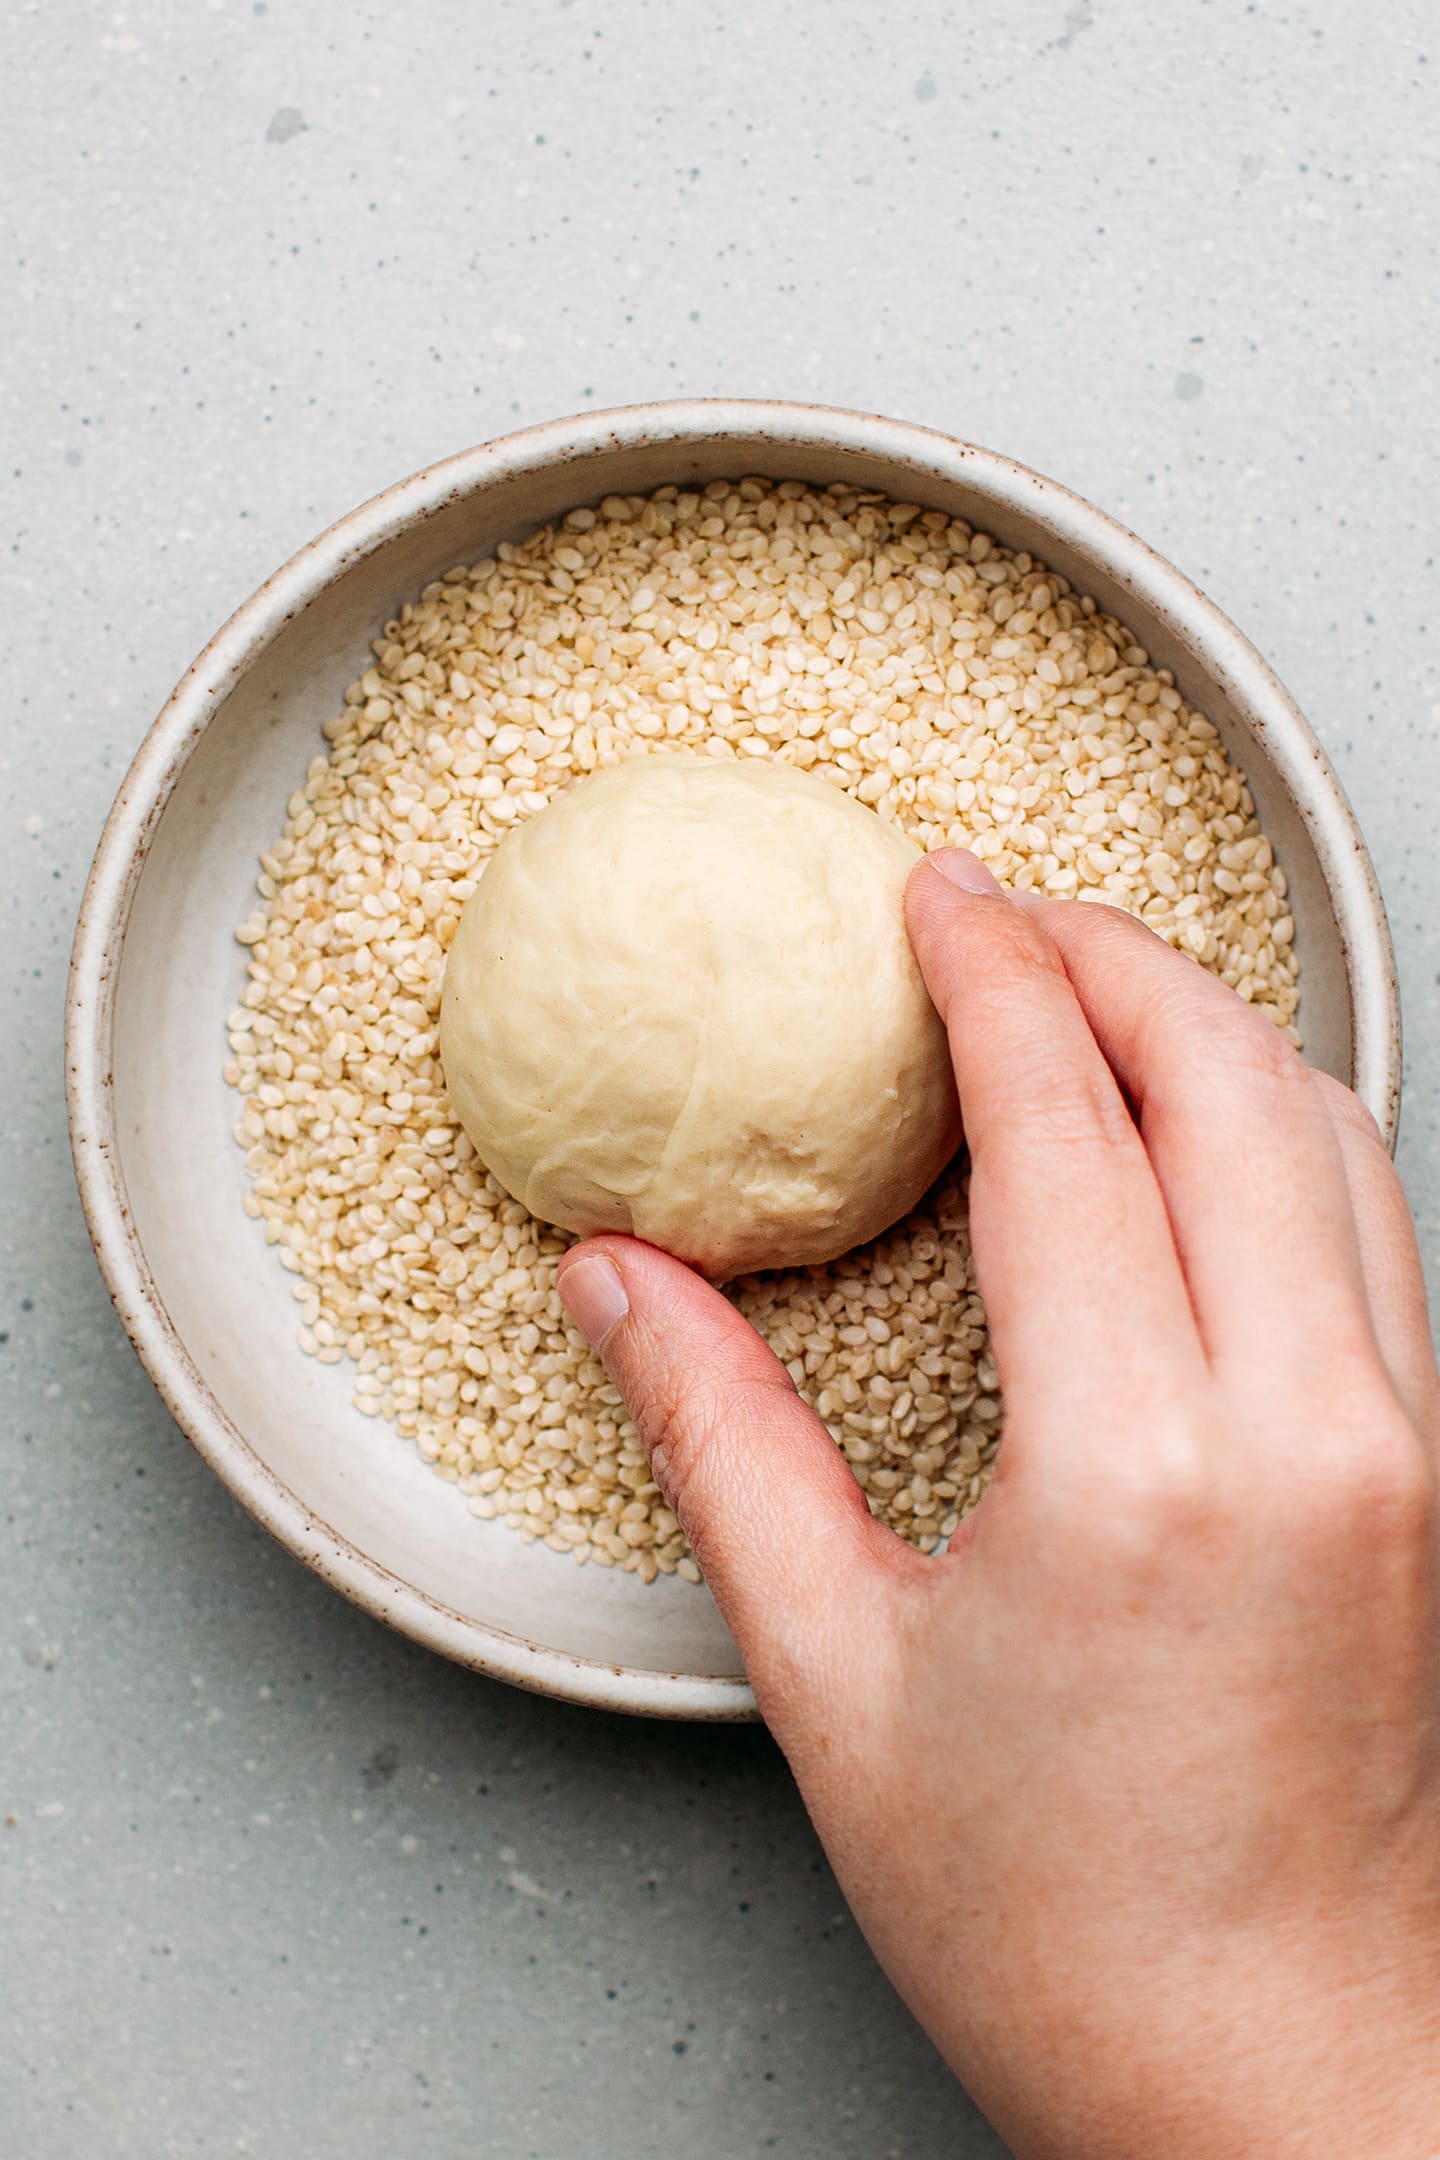 Dipping a ball of dough into sesame seeds.